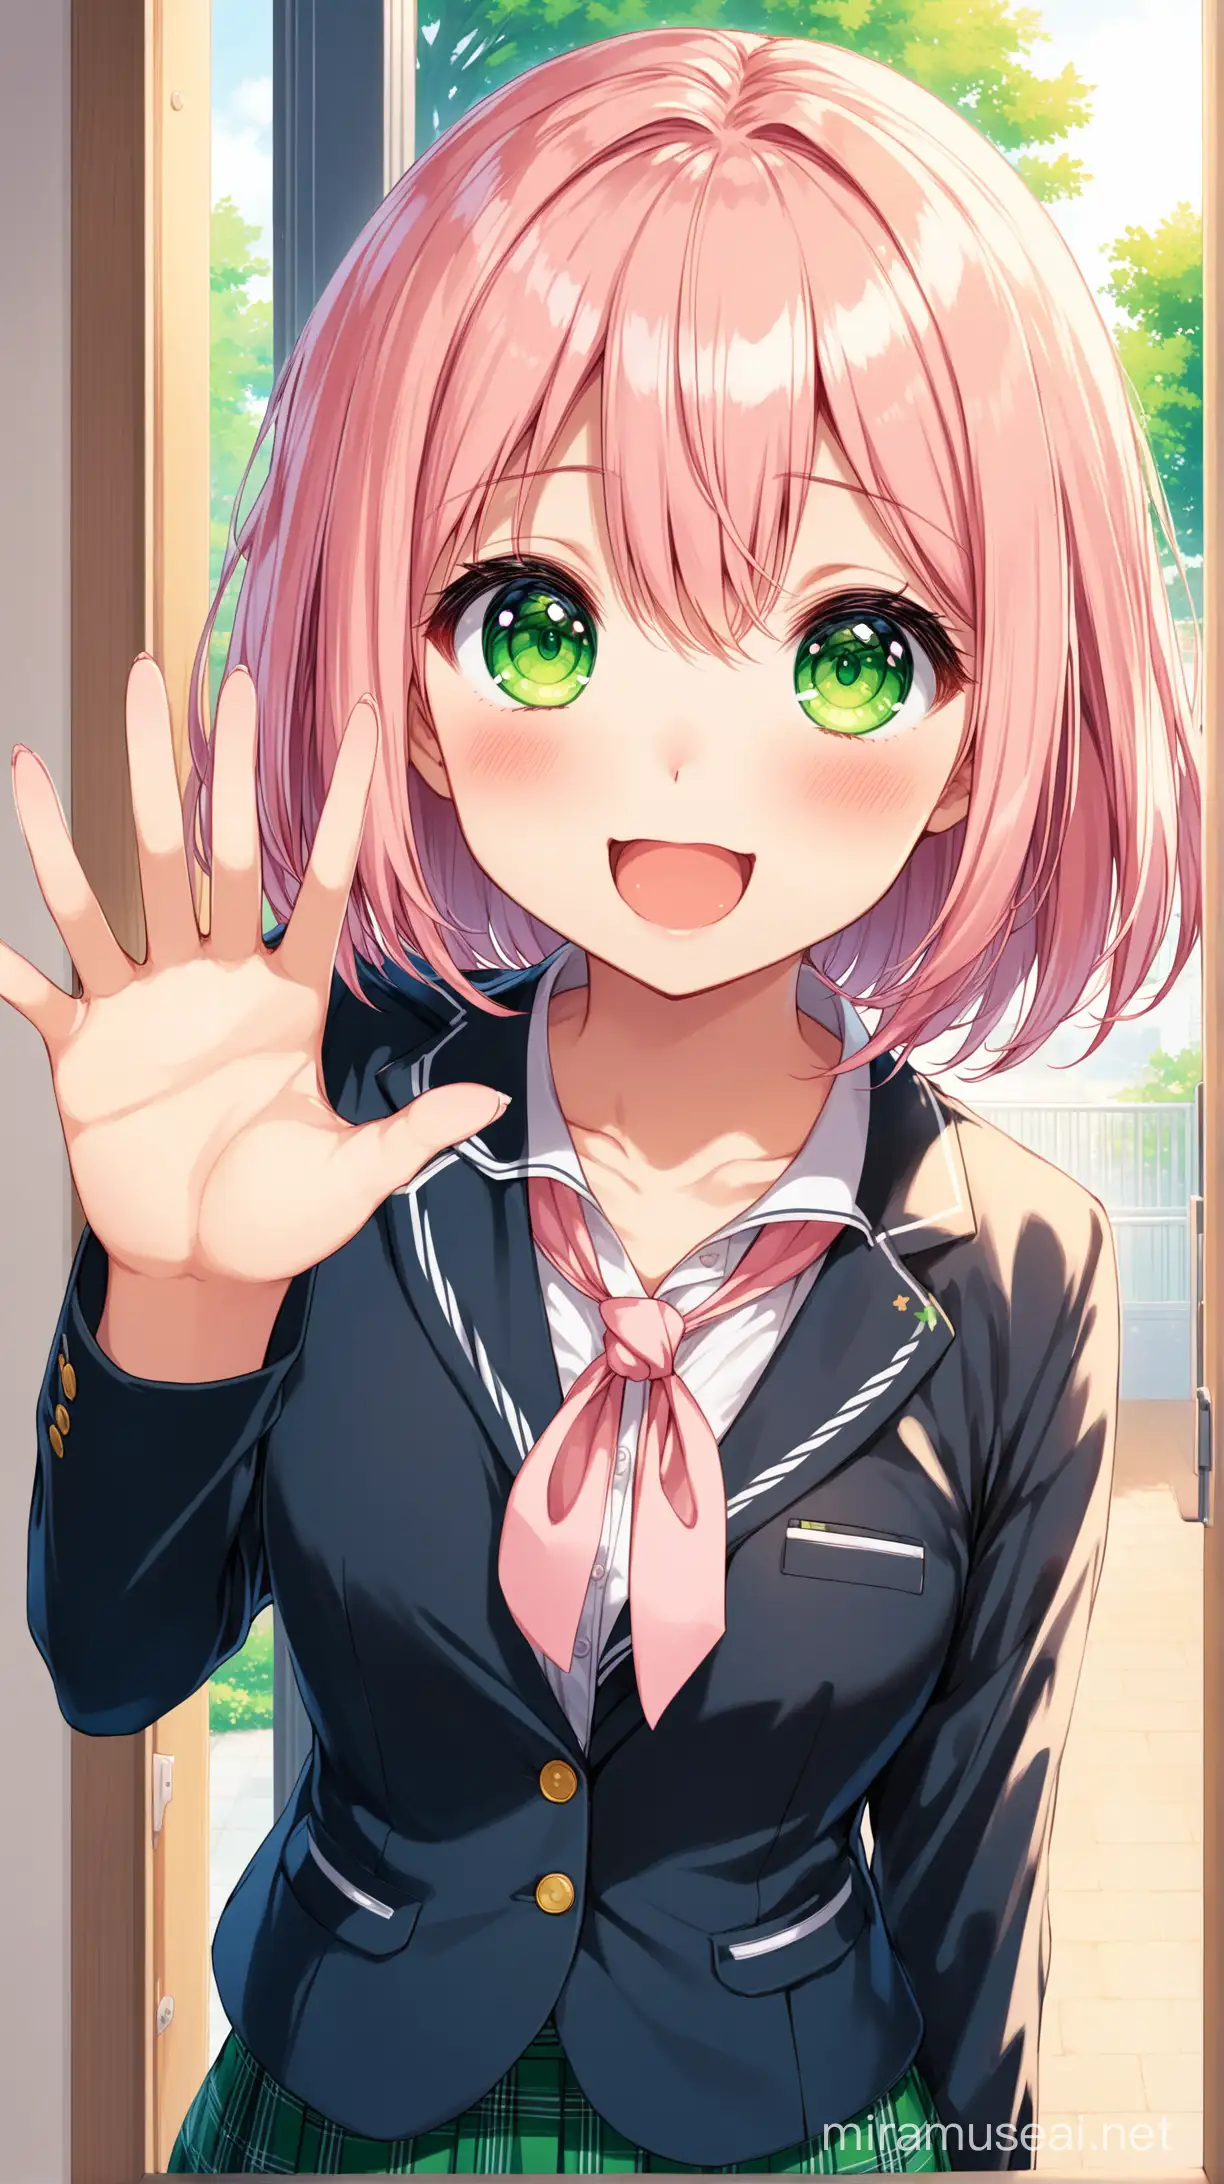 Cheerful Anime Schoolgirl Greeting in Vibrant Plaza